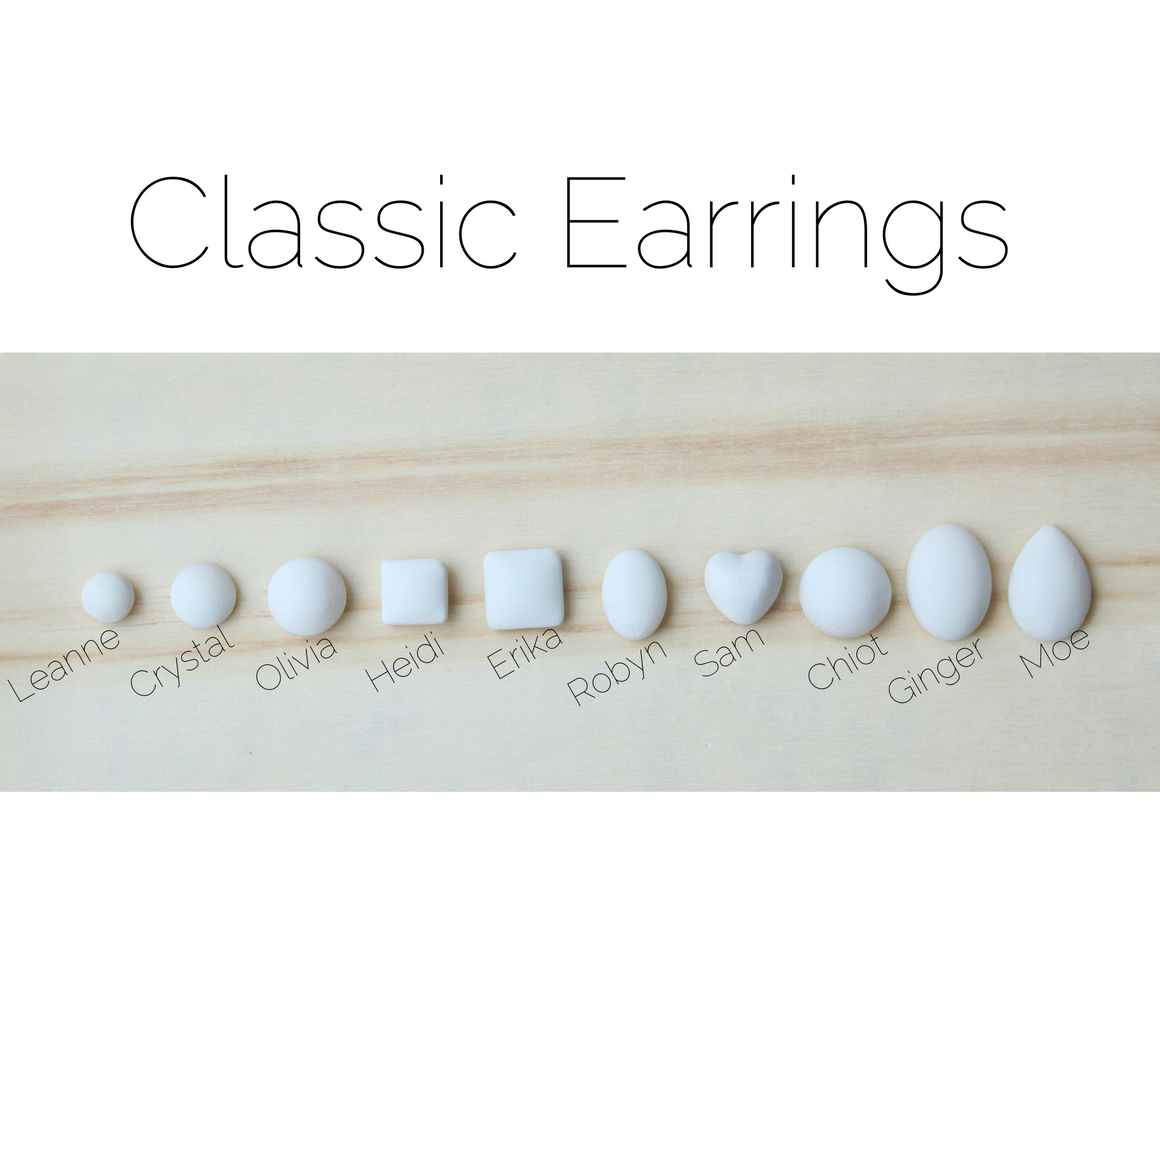 Classic Earrings